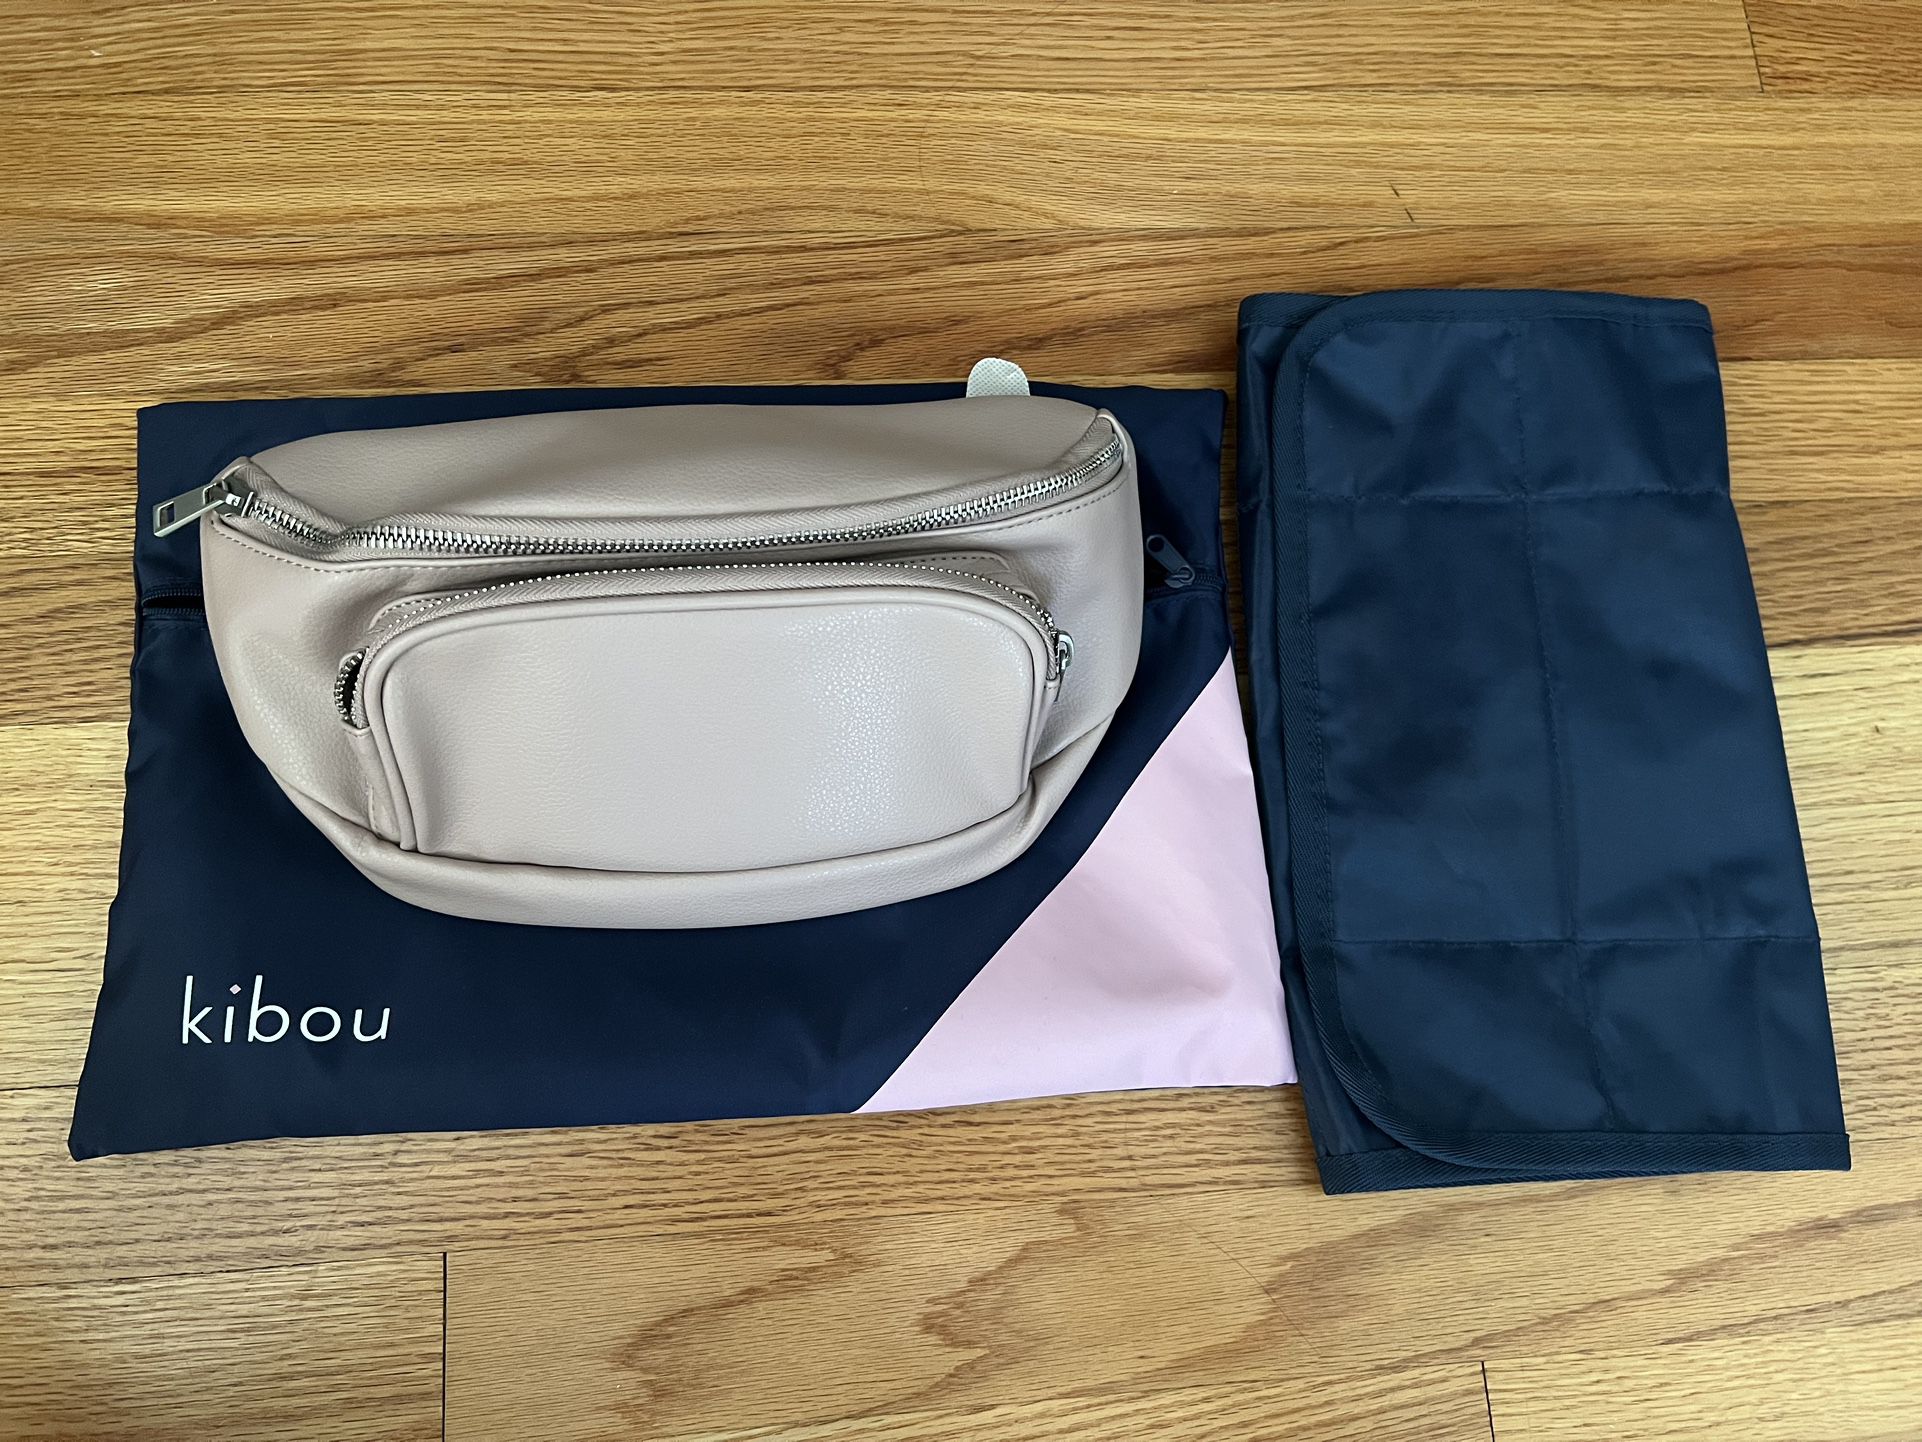 Kibou Vegan Leather Diaper Bag - Blush Color 